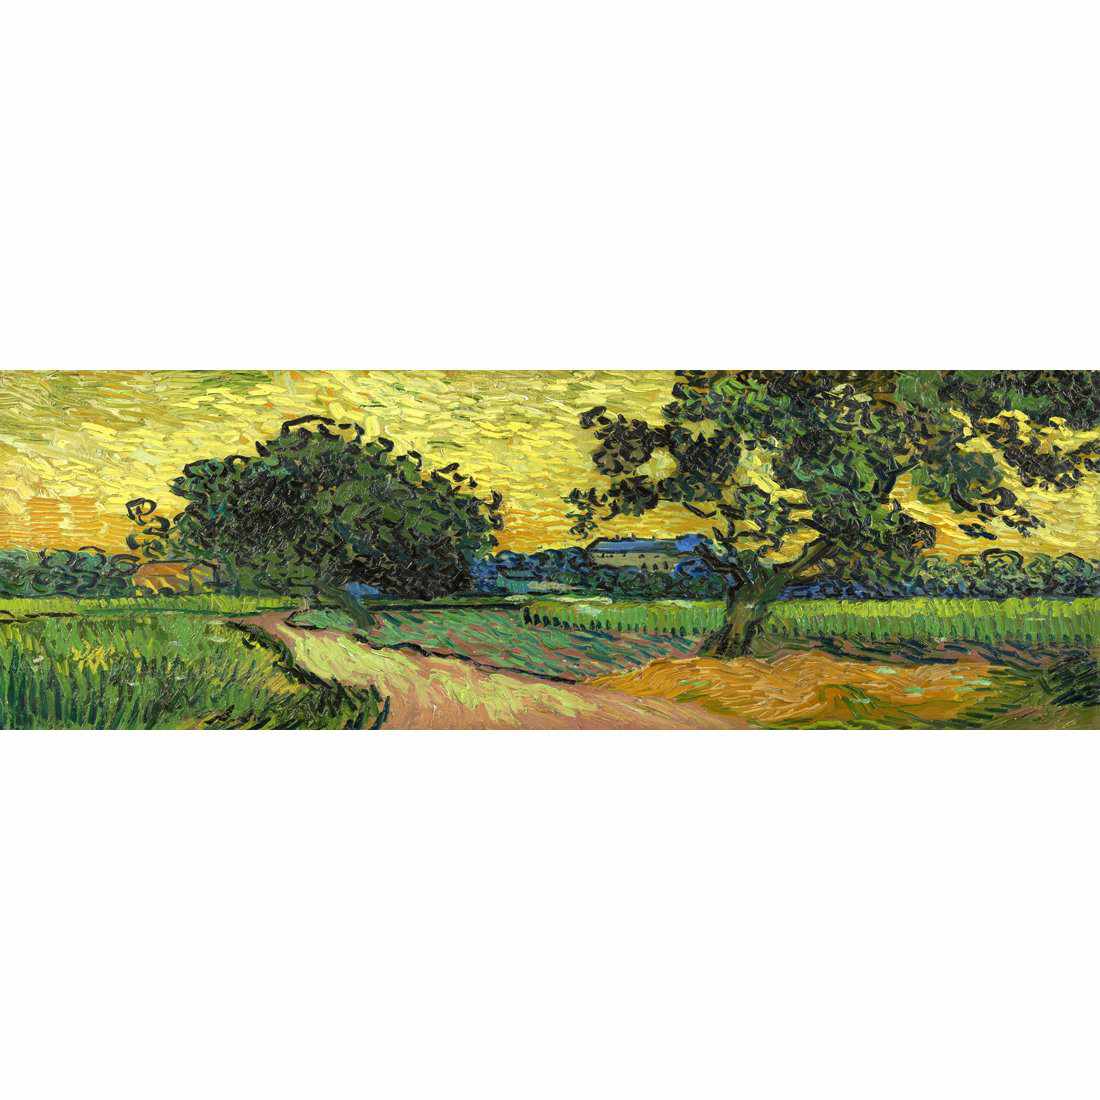 Landscape At Twilight - Van Gogh Canvas Art-Canvas-Wall Art Designs-60x20cm-Canvas - No Frame-Wall Art Designs